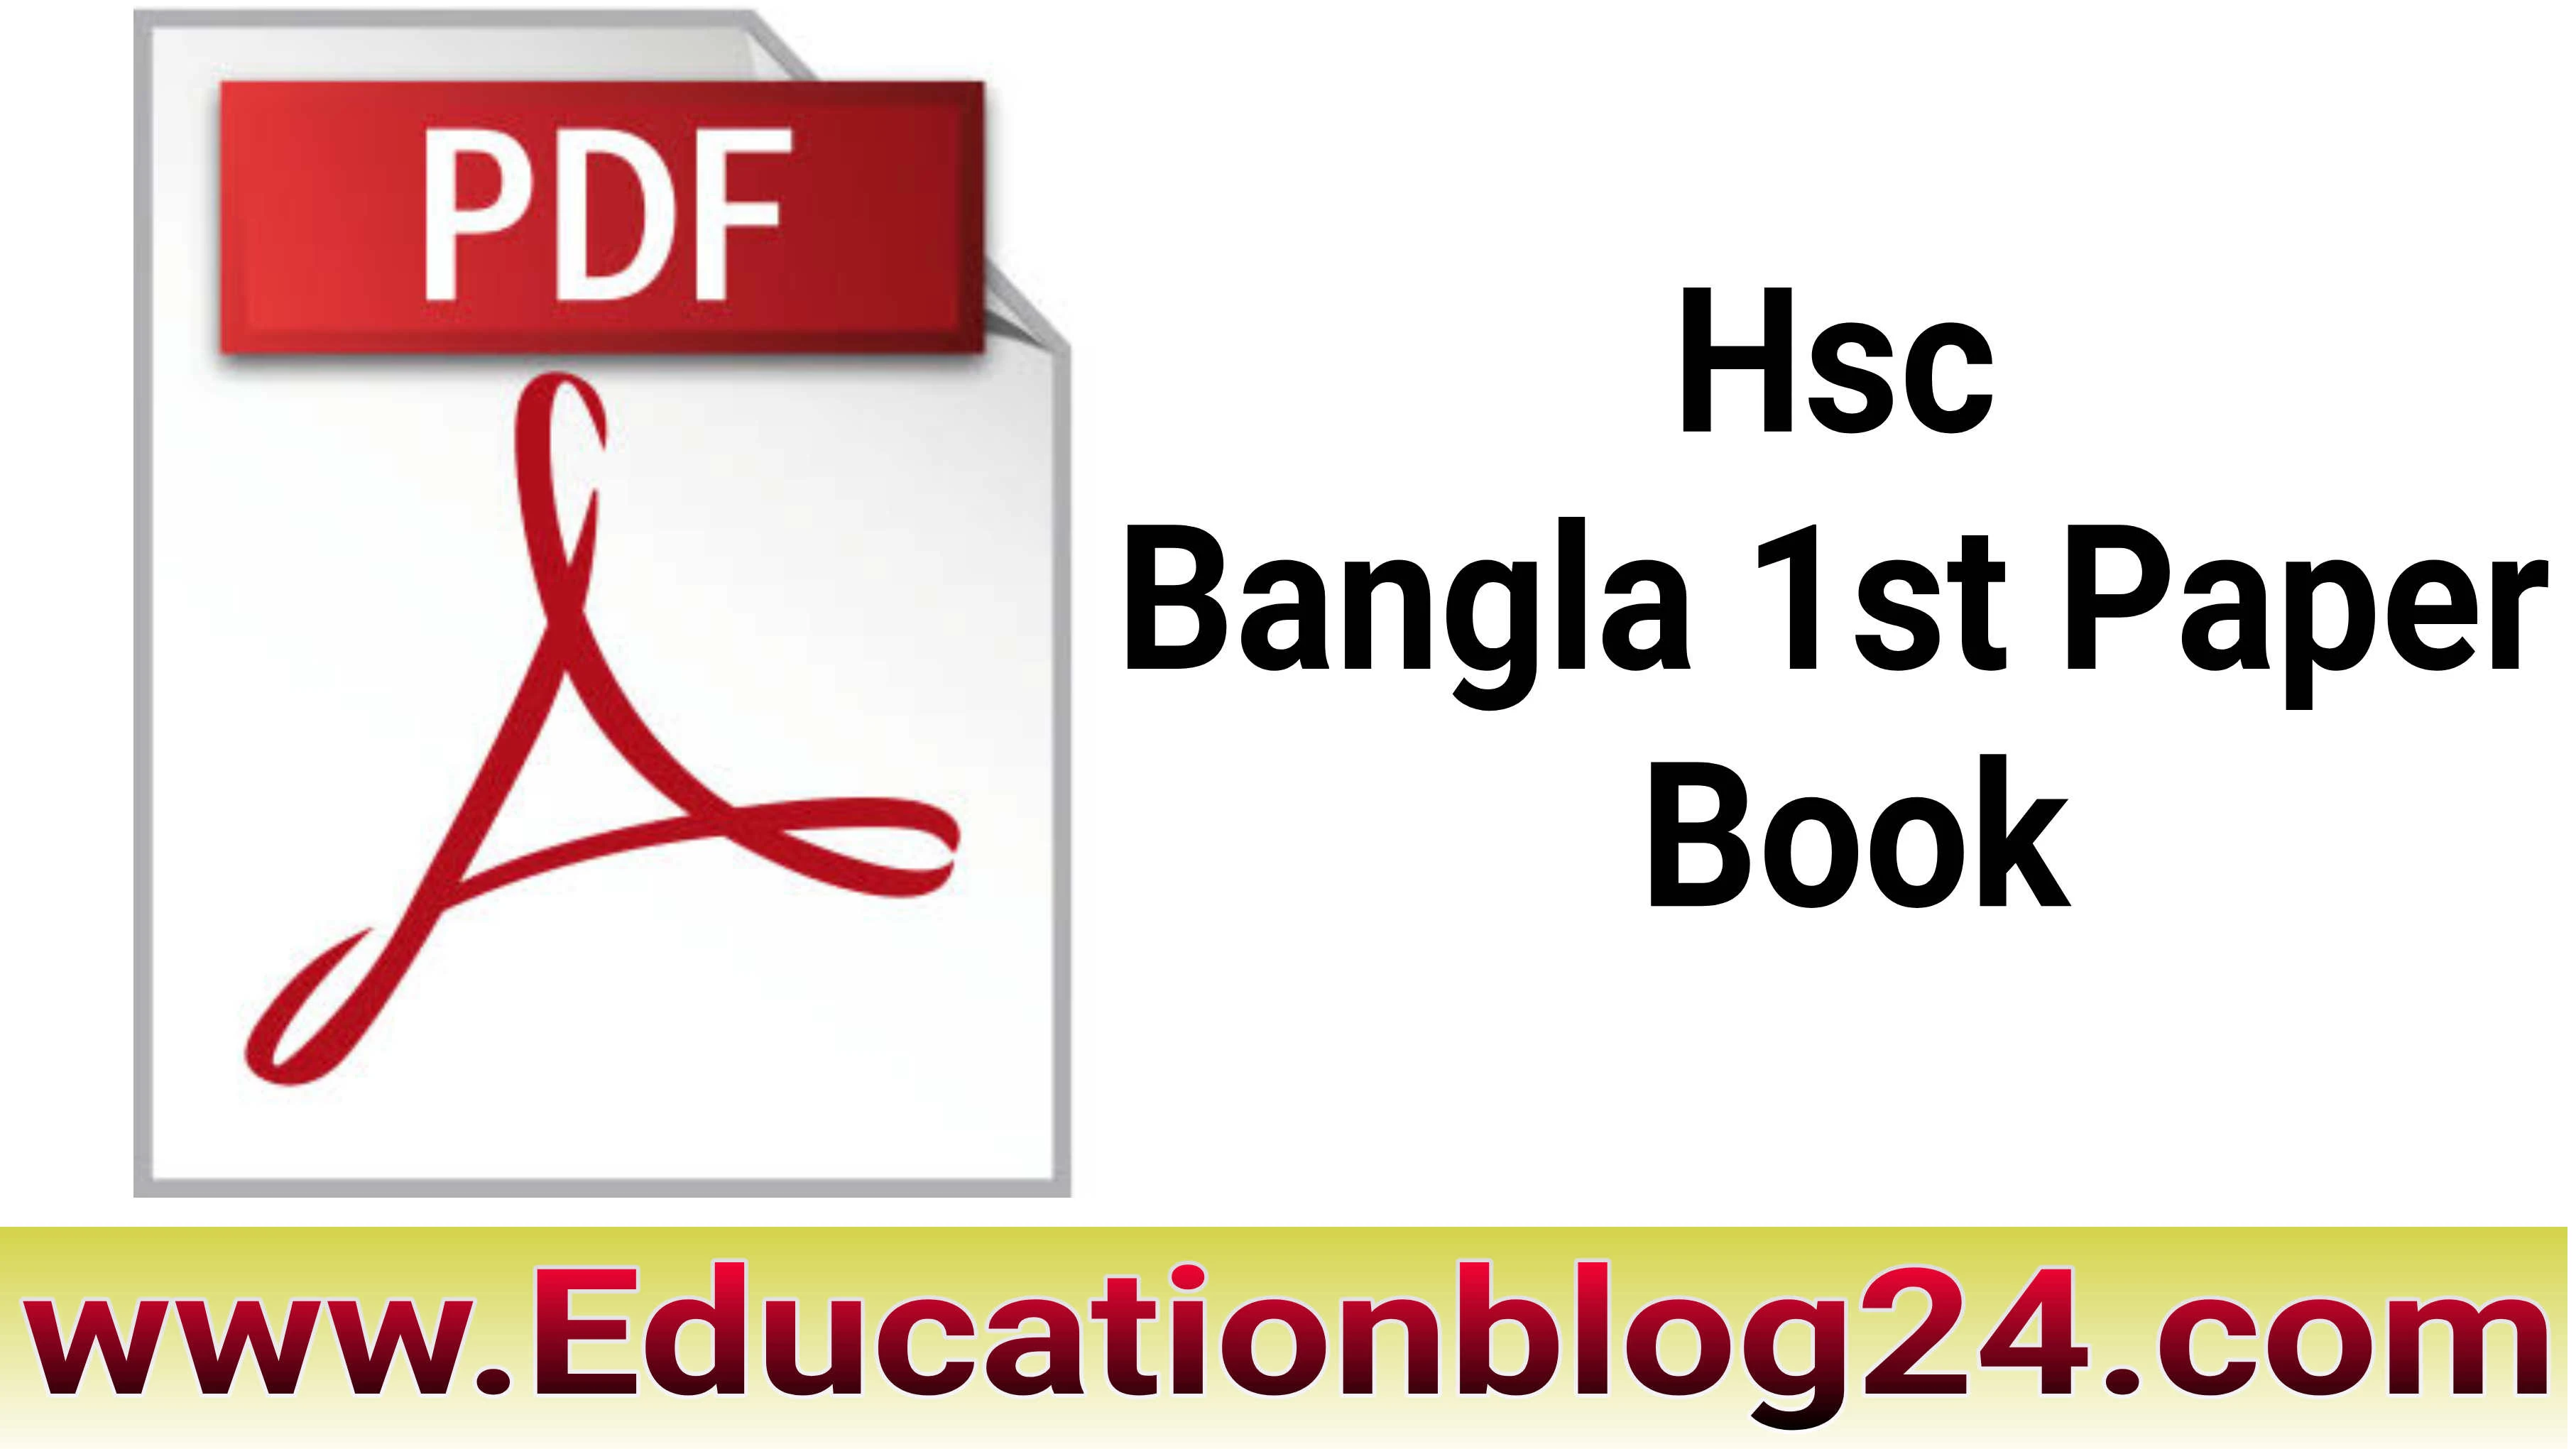 Hsc bangla 1st paper book pdf download 2023 | Hsc bangla 1st paper pdf | Inter 1st year bangla book pdf